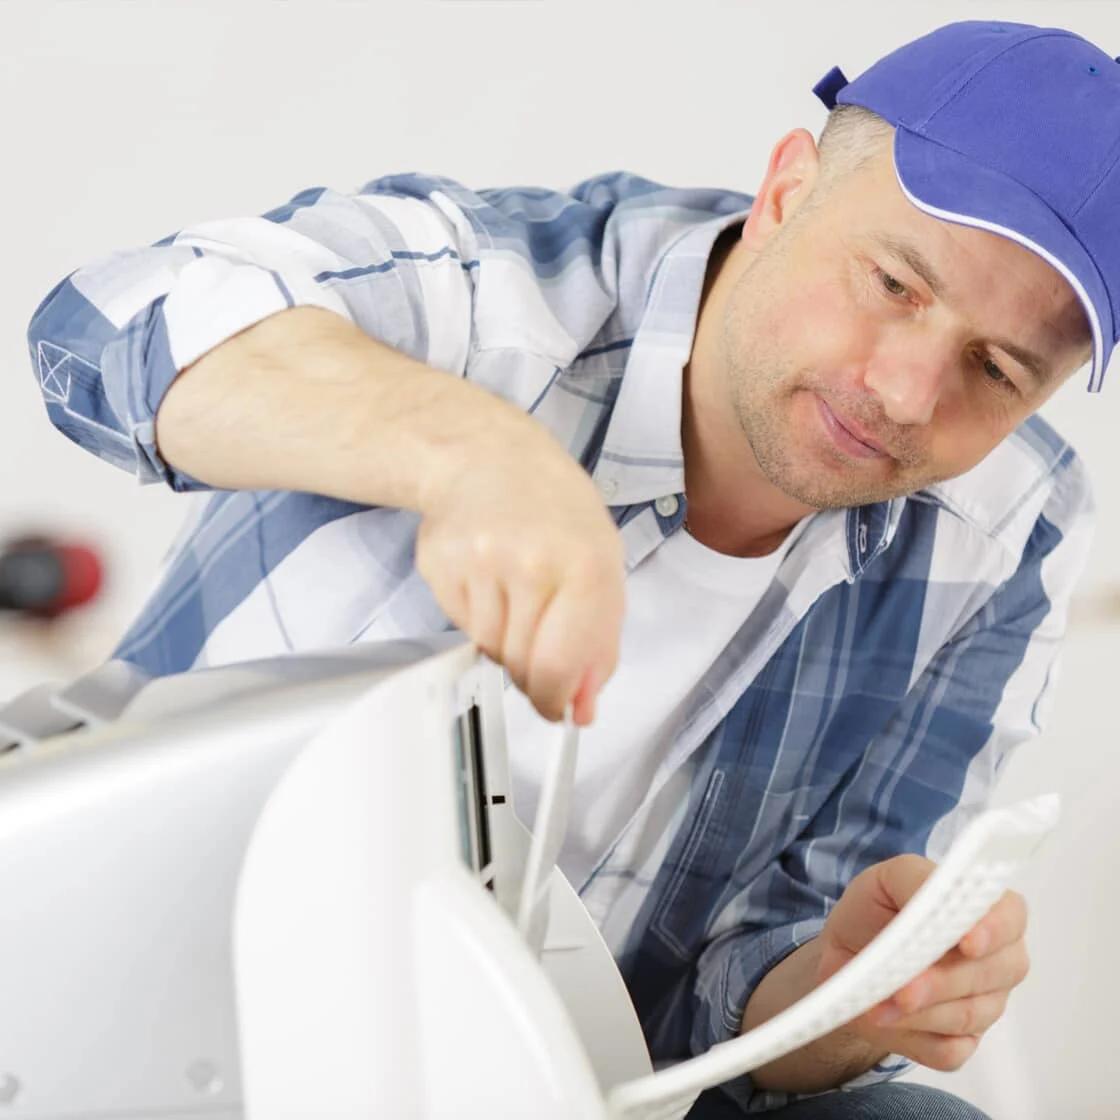 Repair person inspecting AC